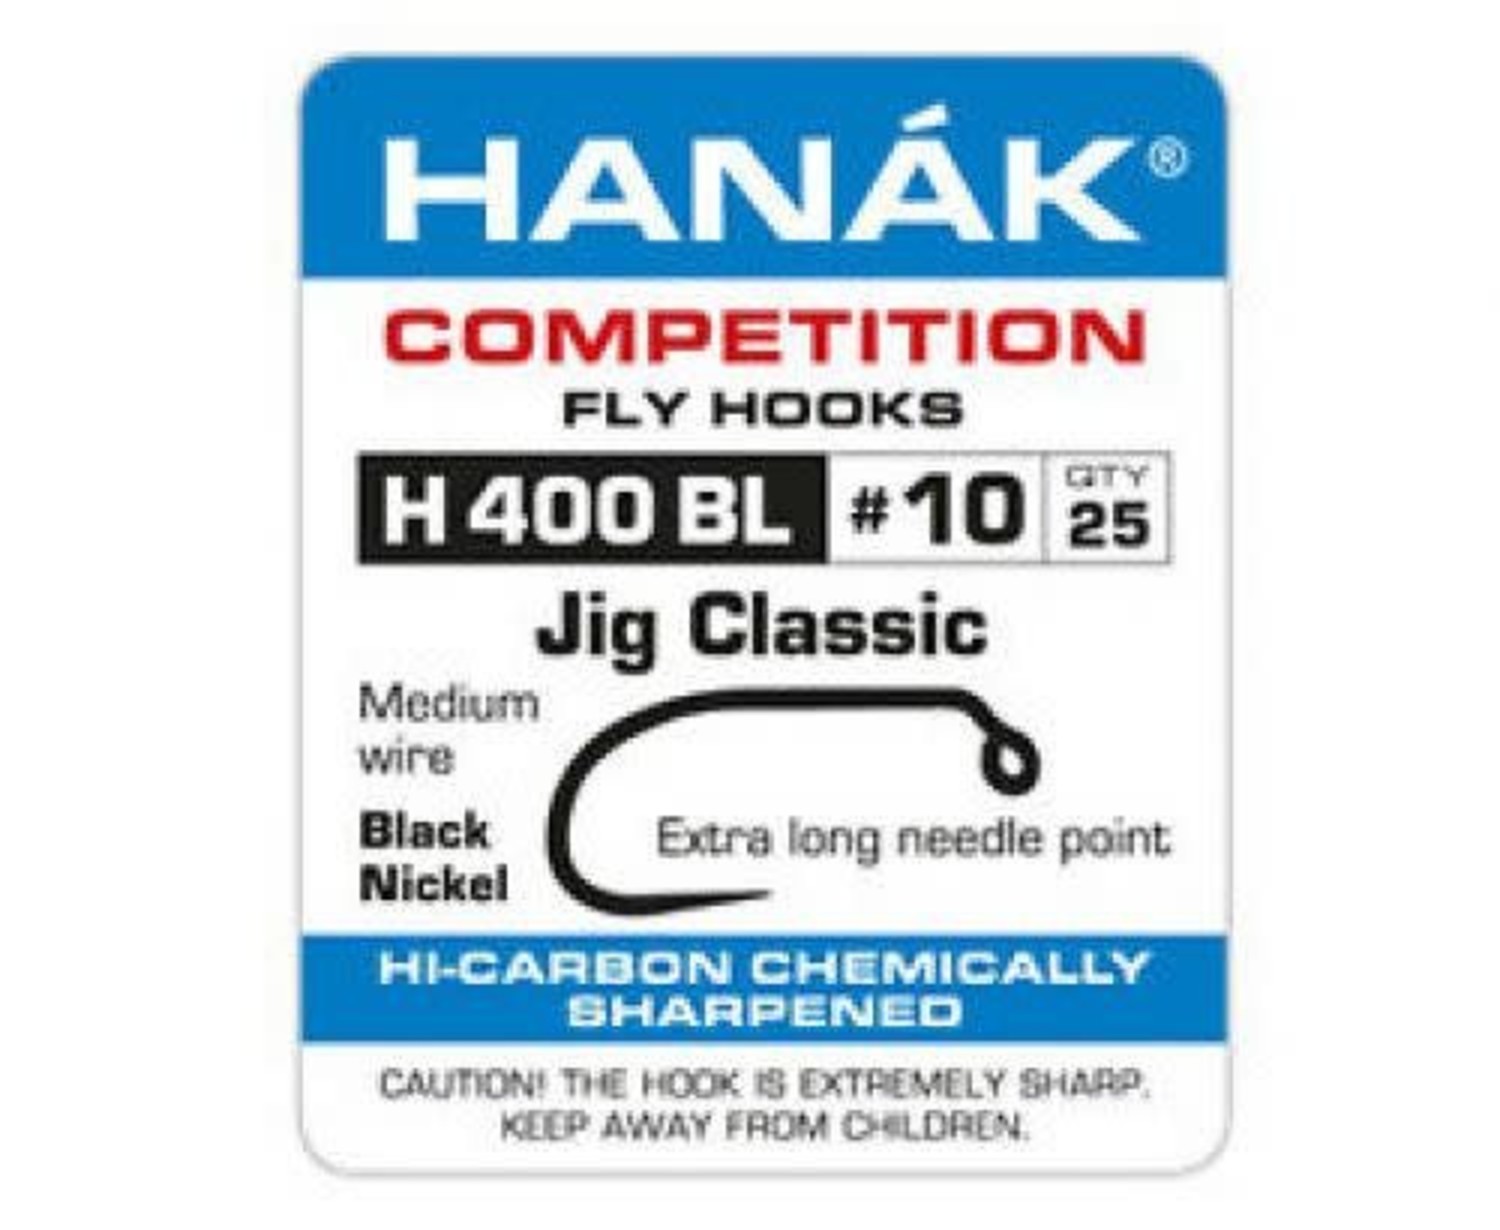 Hanak Hanak H 400 BL Classic Jig Hook - Royal Treatment Fly Fishing